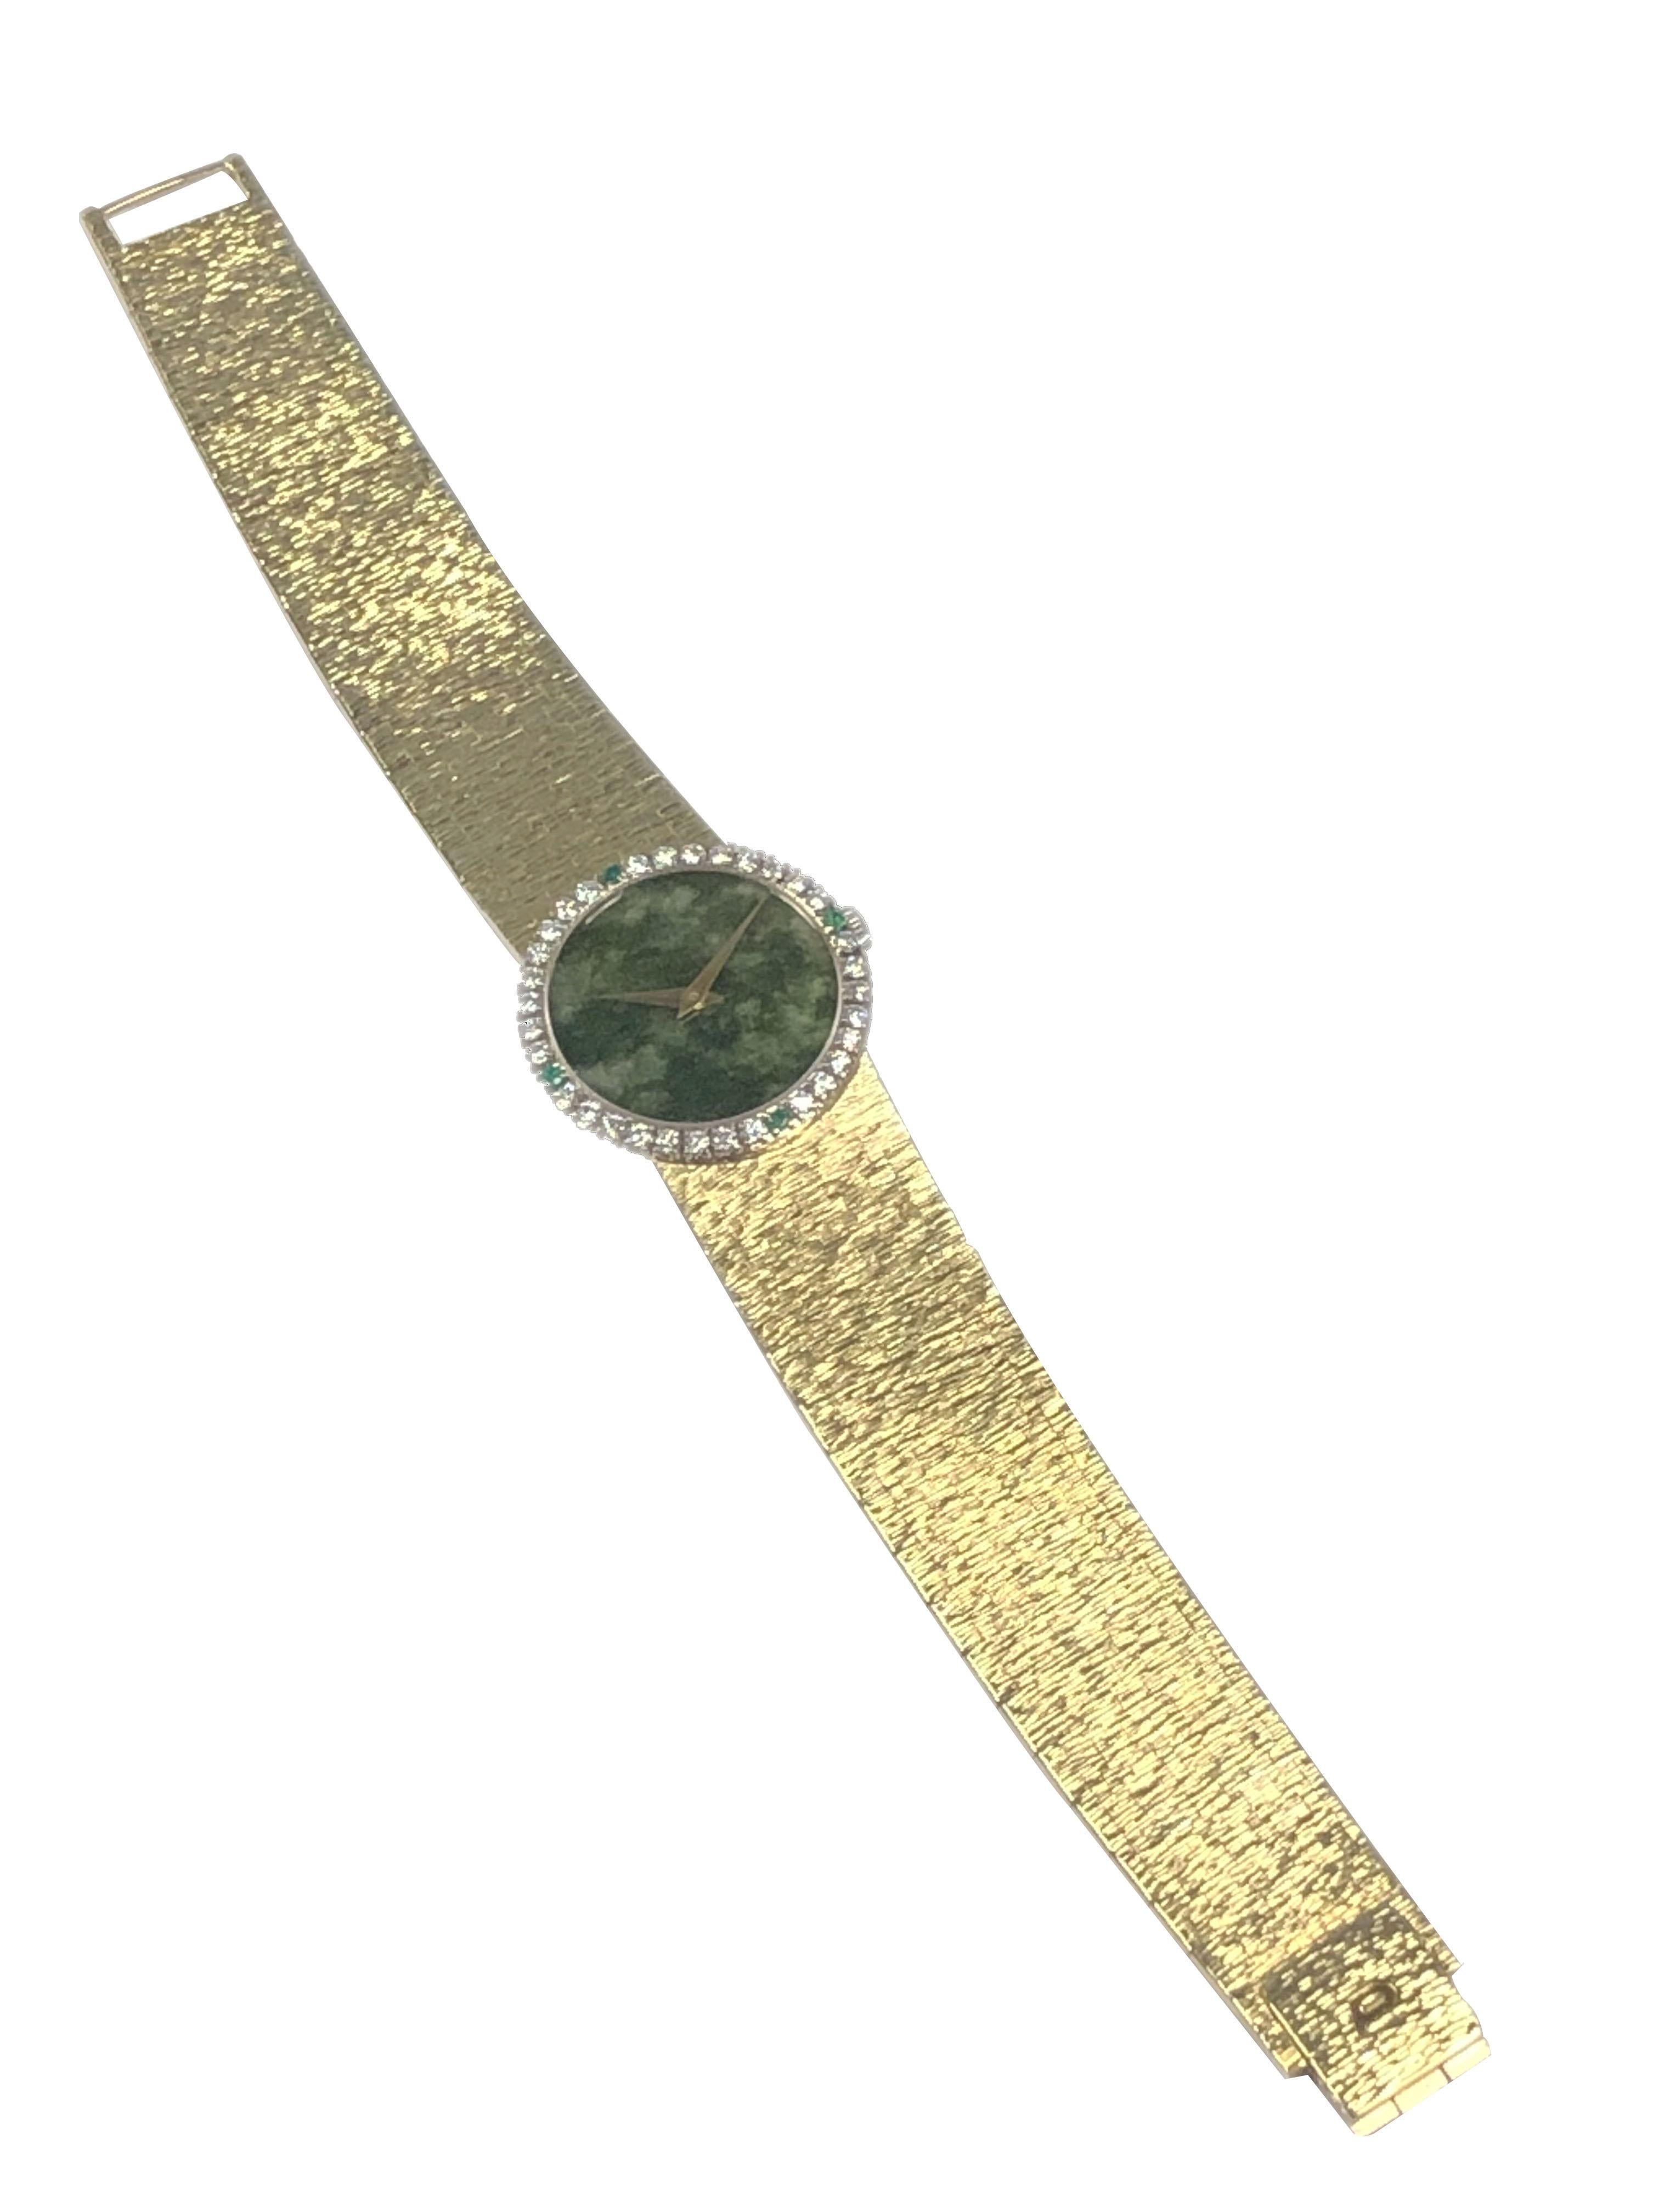 Round Cut Piaget Gold Diamond and Jadite Dial Ladies Mechanical Wrist Watch